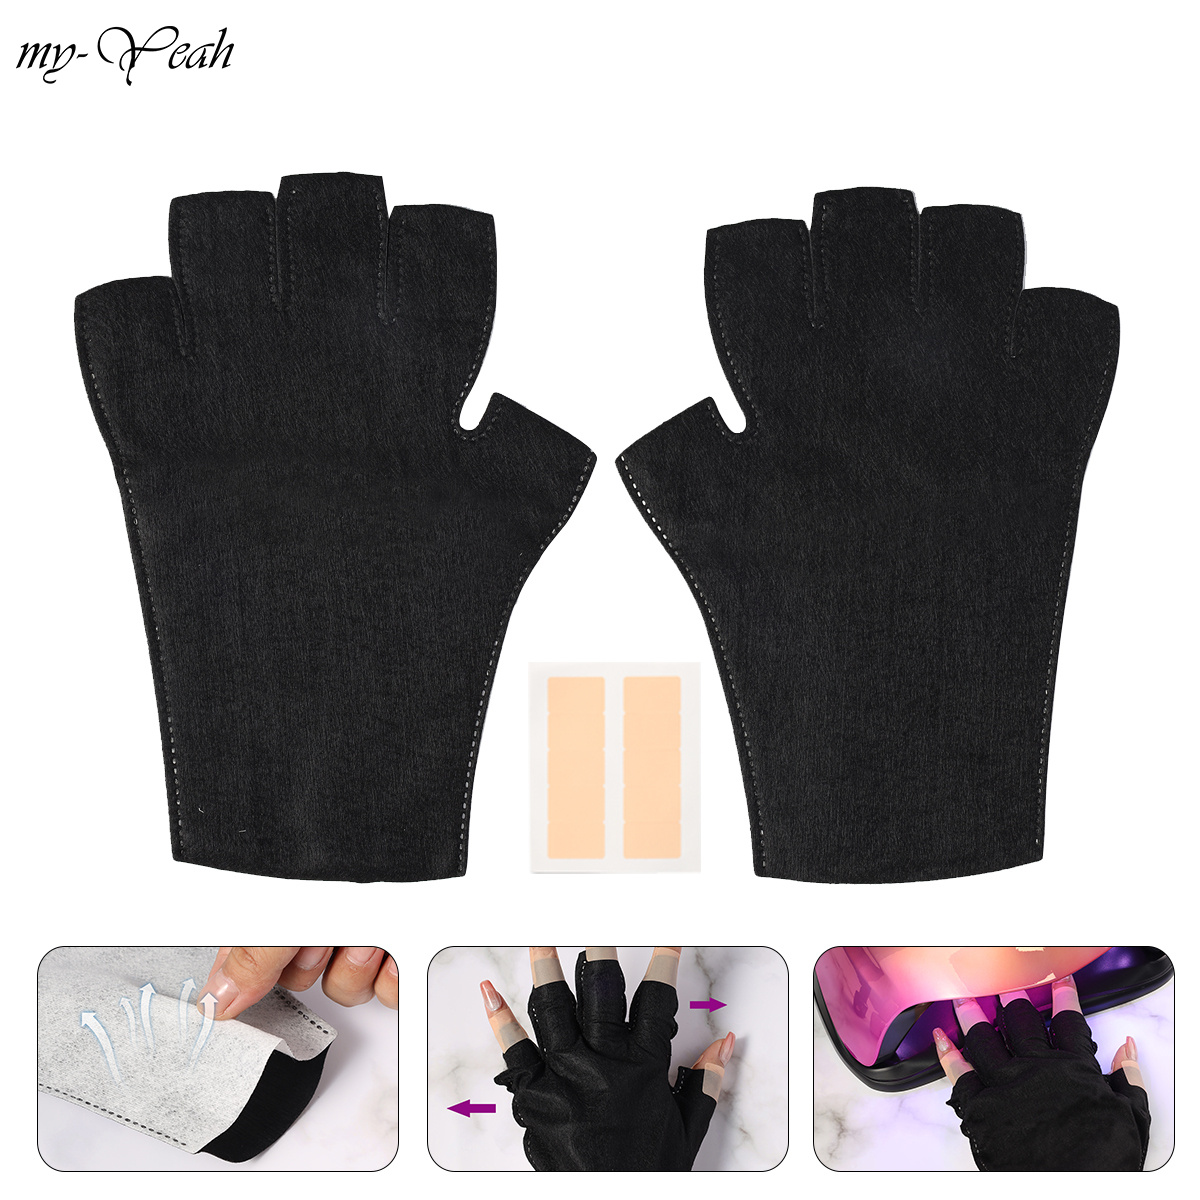 myyeah Nail Art Gloves Protection Fingerless Gloves Anti UV Radiation